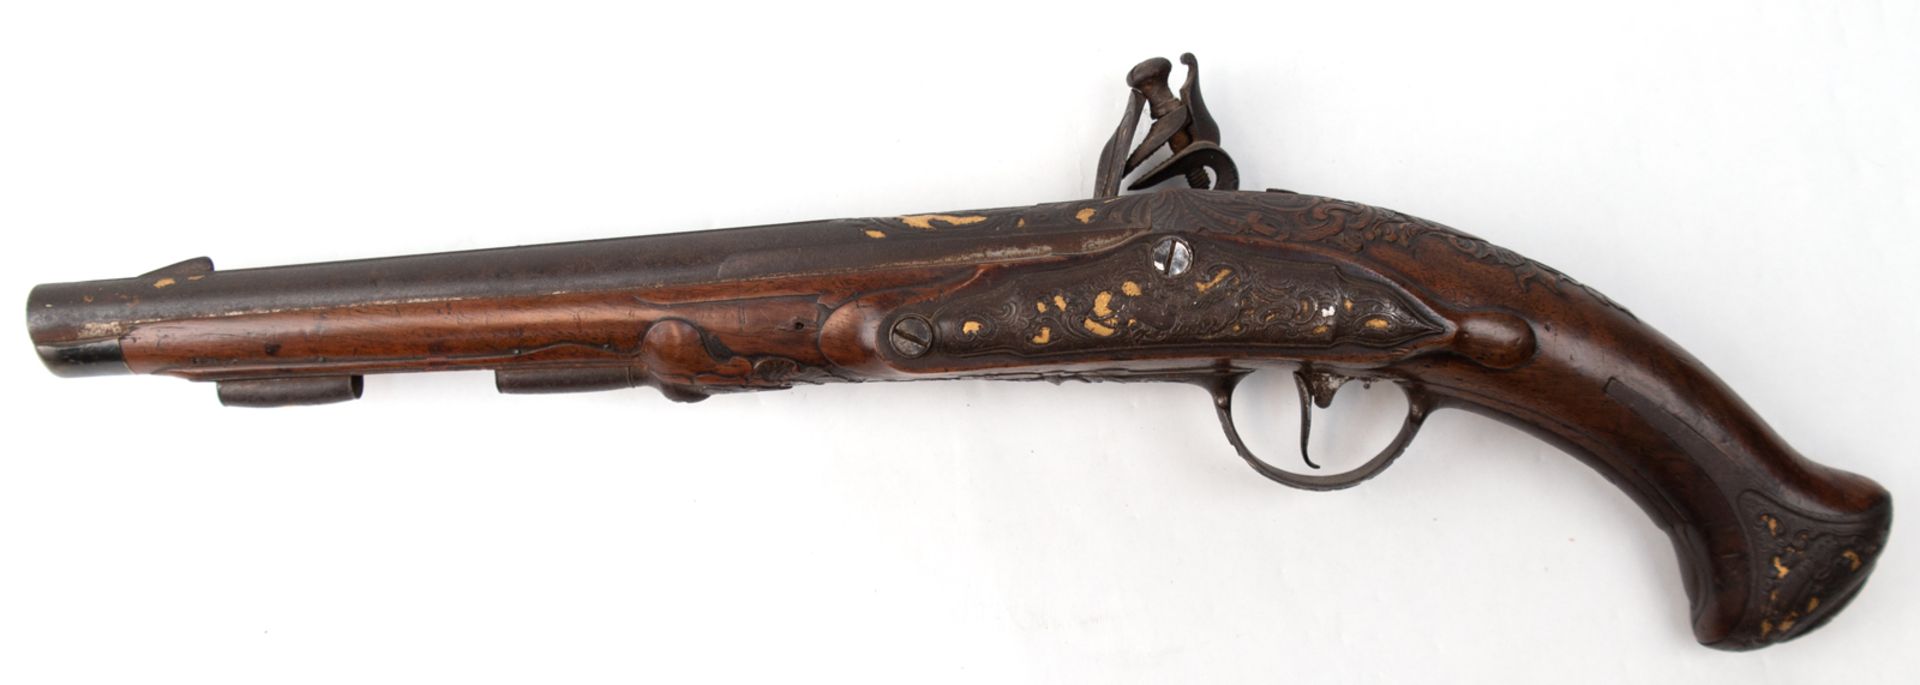 Steinschloßpistole, 18. Jh., nicht funktionstüchtig, Schloß defekt, starke Gebrauchspuren, L. 43 cm